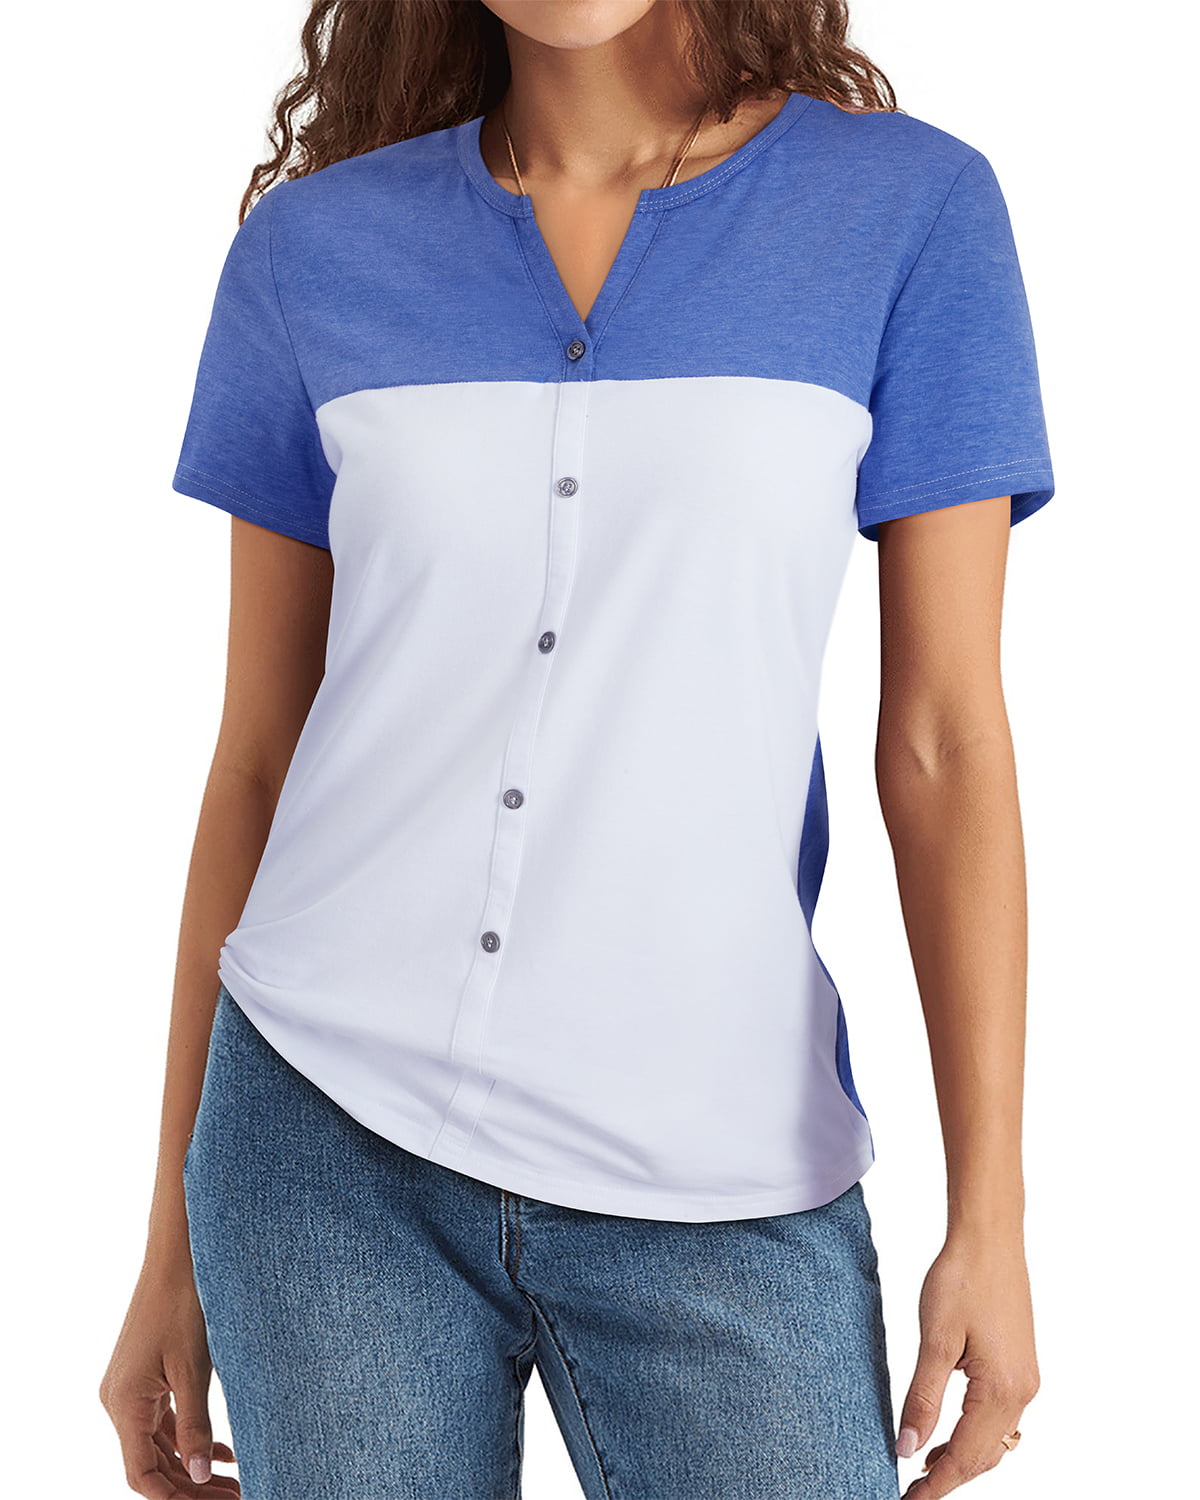 ULTRANICE Women's Buttons Up V Neck Tops Causal Sleeveless/Long Sleeve T Shirts Blouses